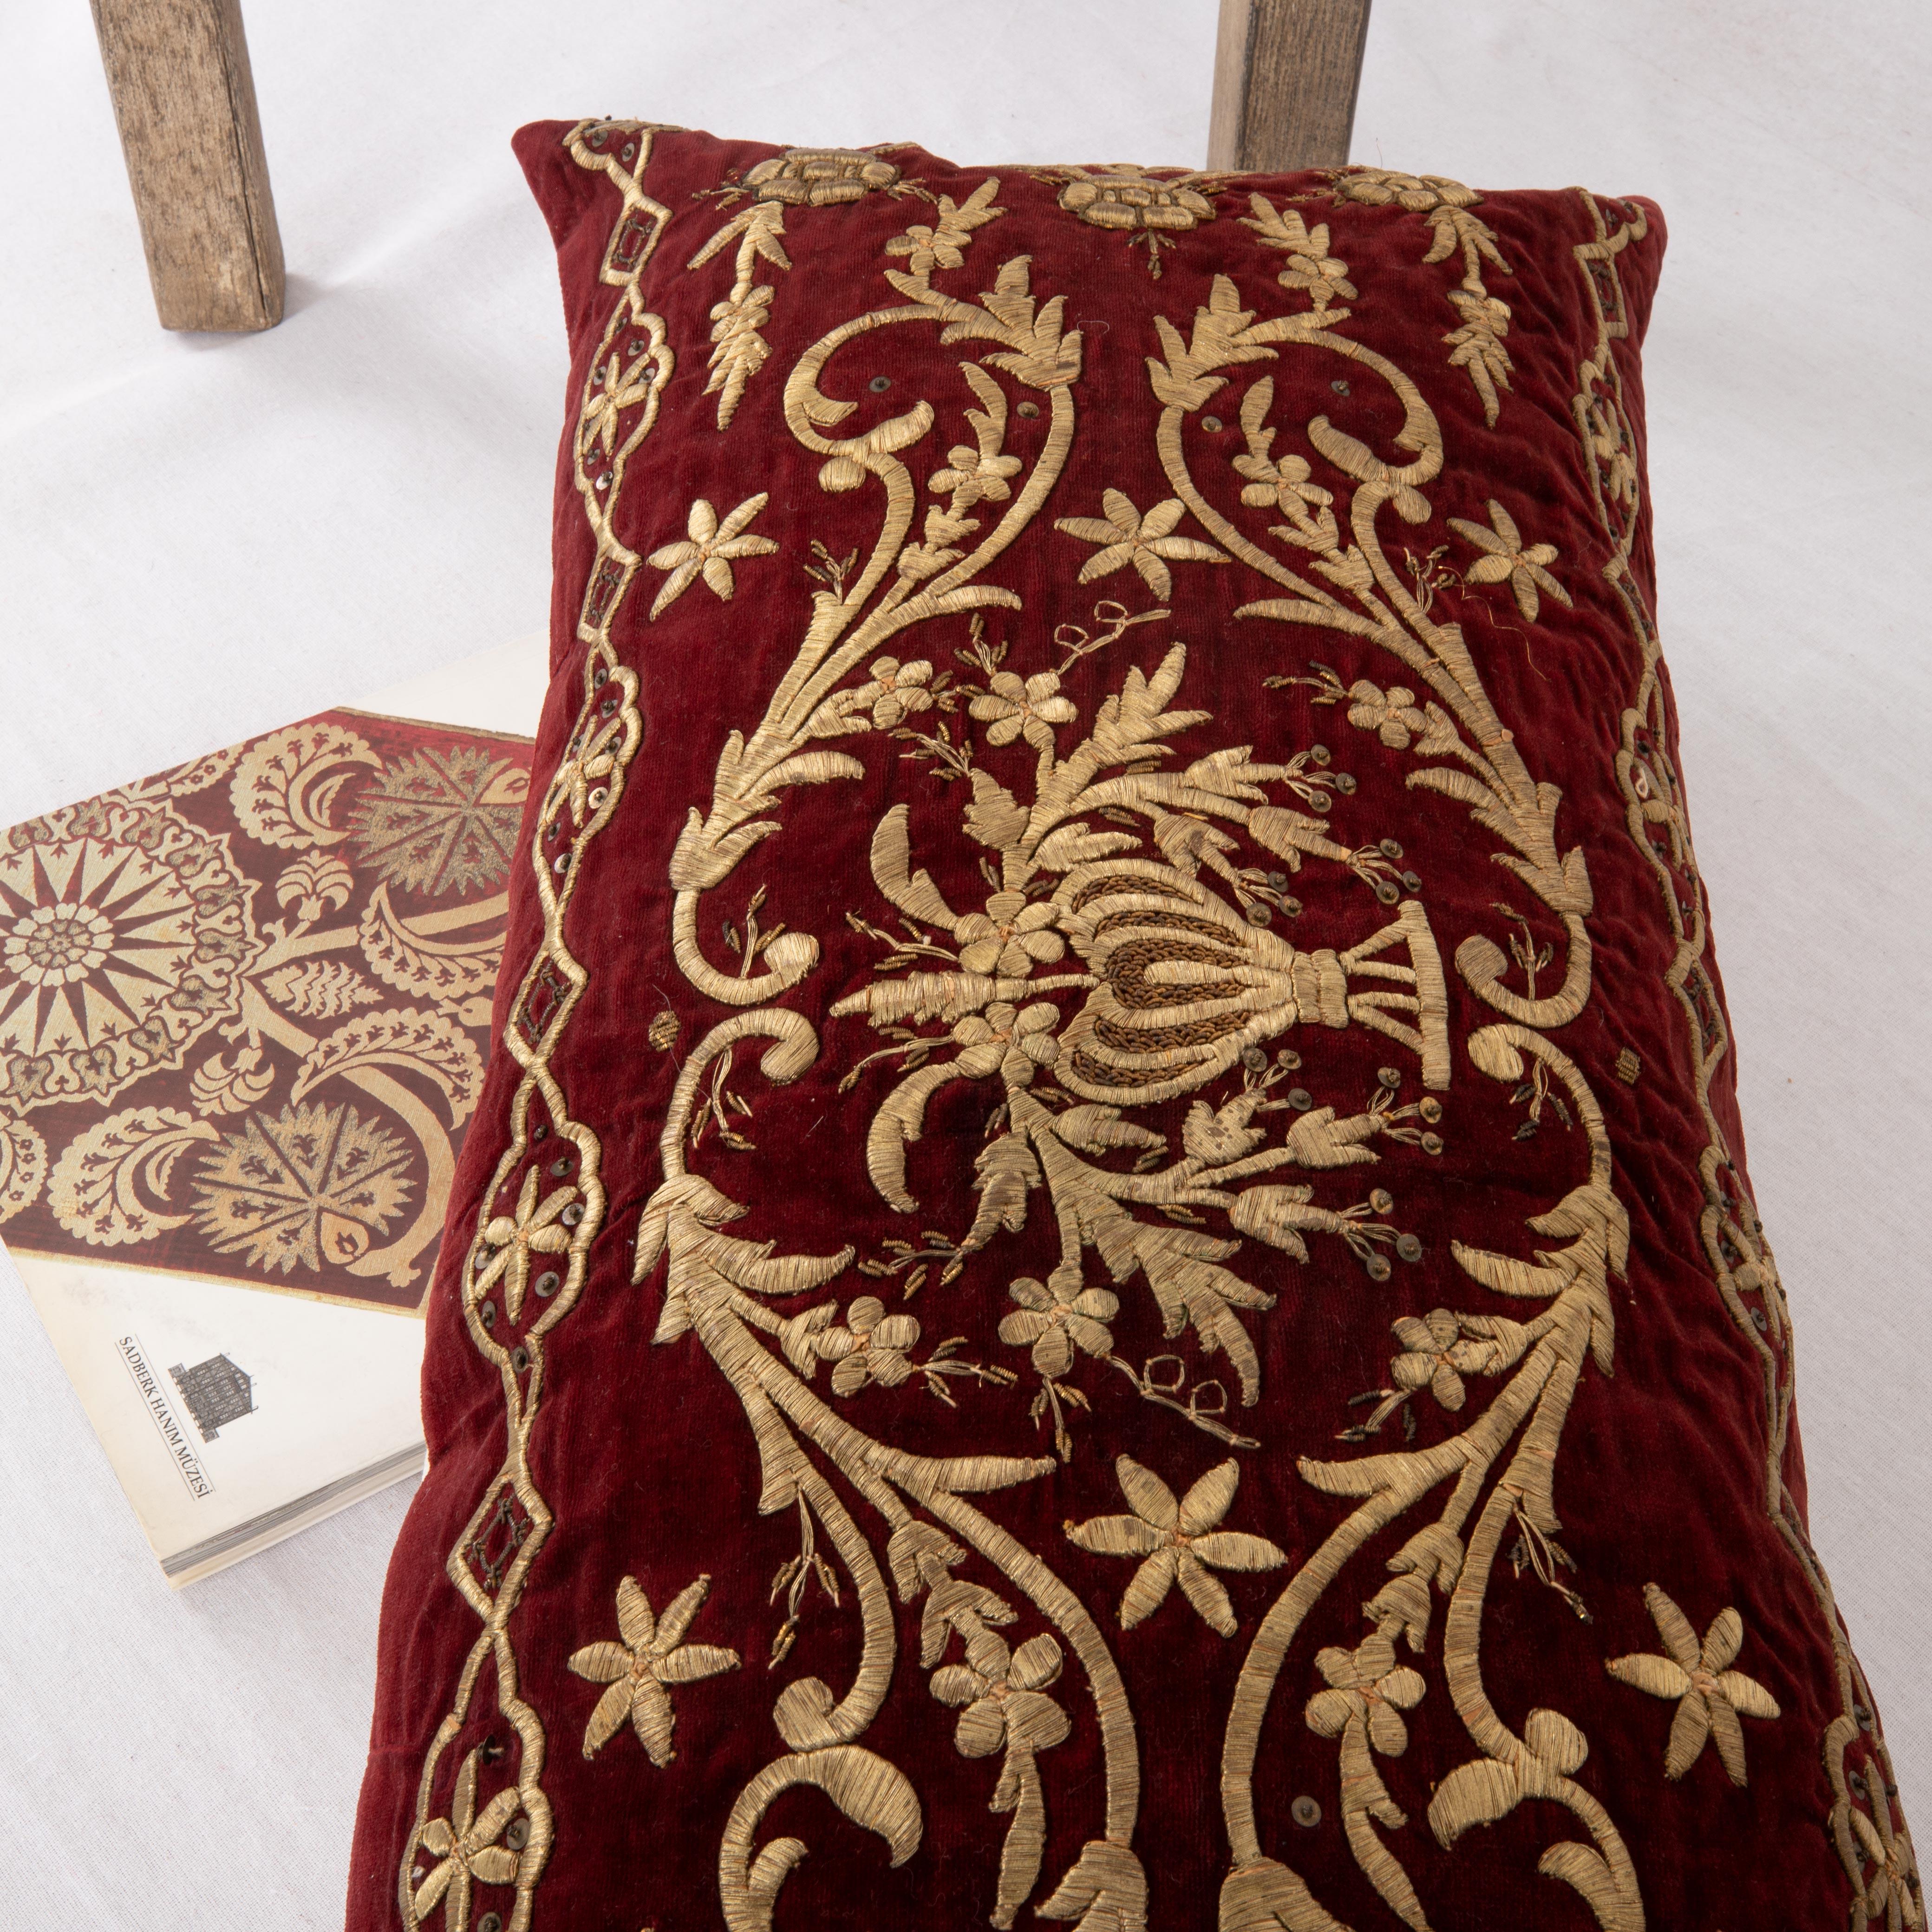 Embroidered Antique Silk Velvet Ottoman Sarma Pillow Cover, L 19th Century